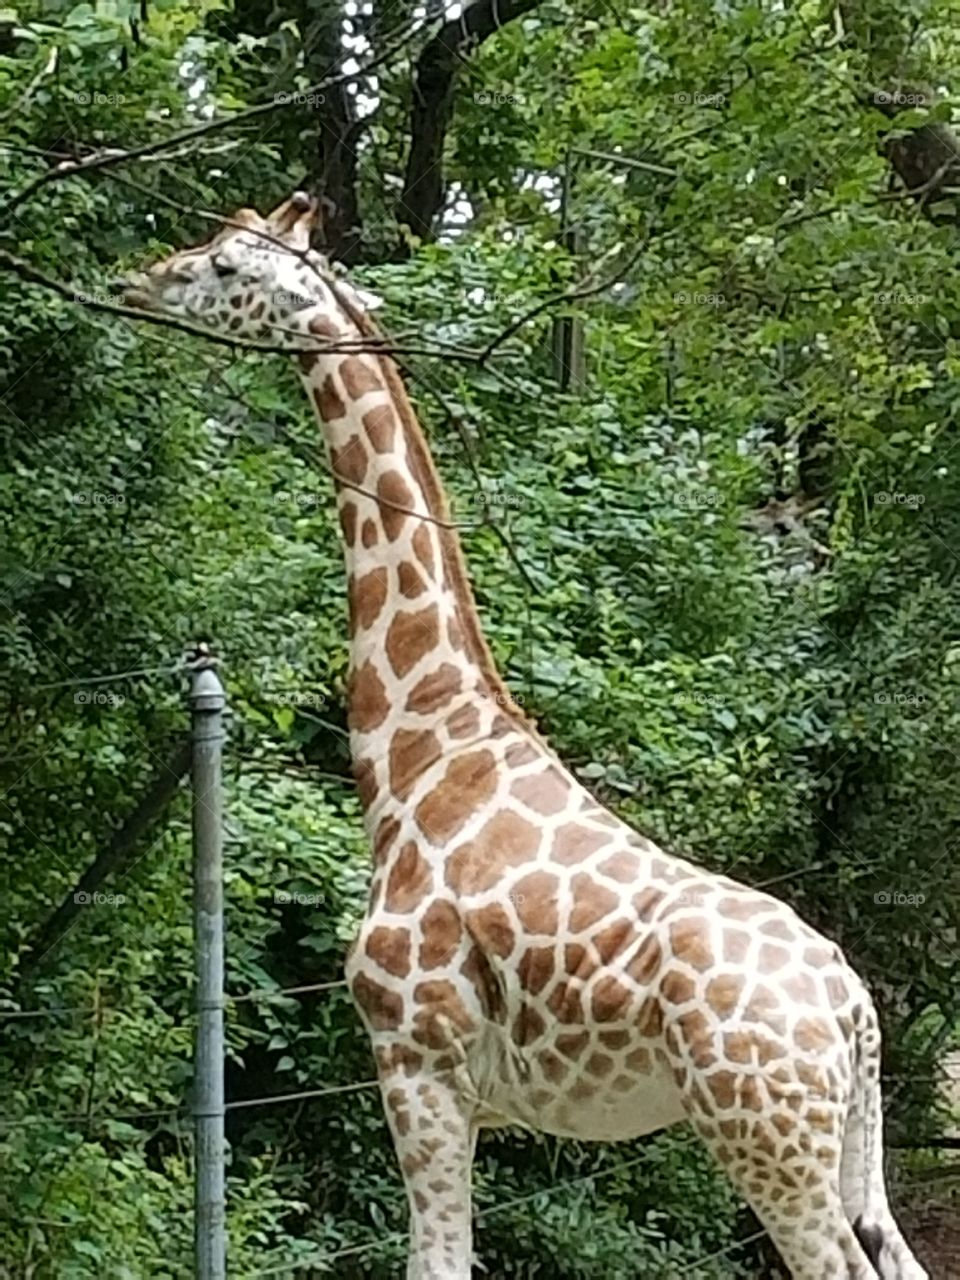 Bronx zoo 2017